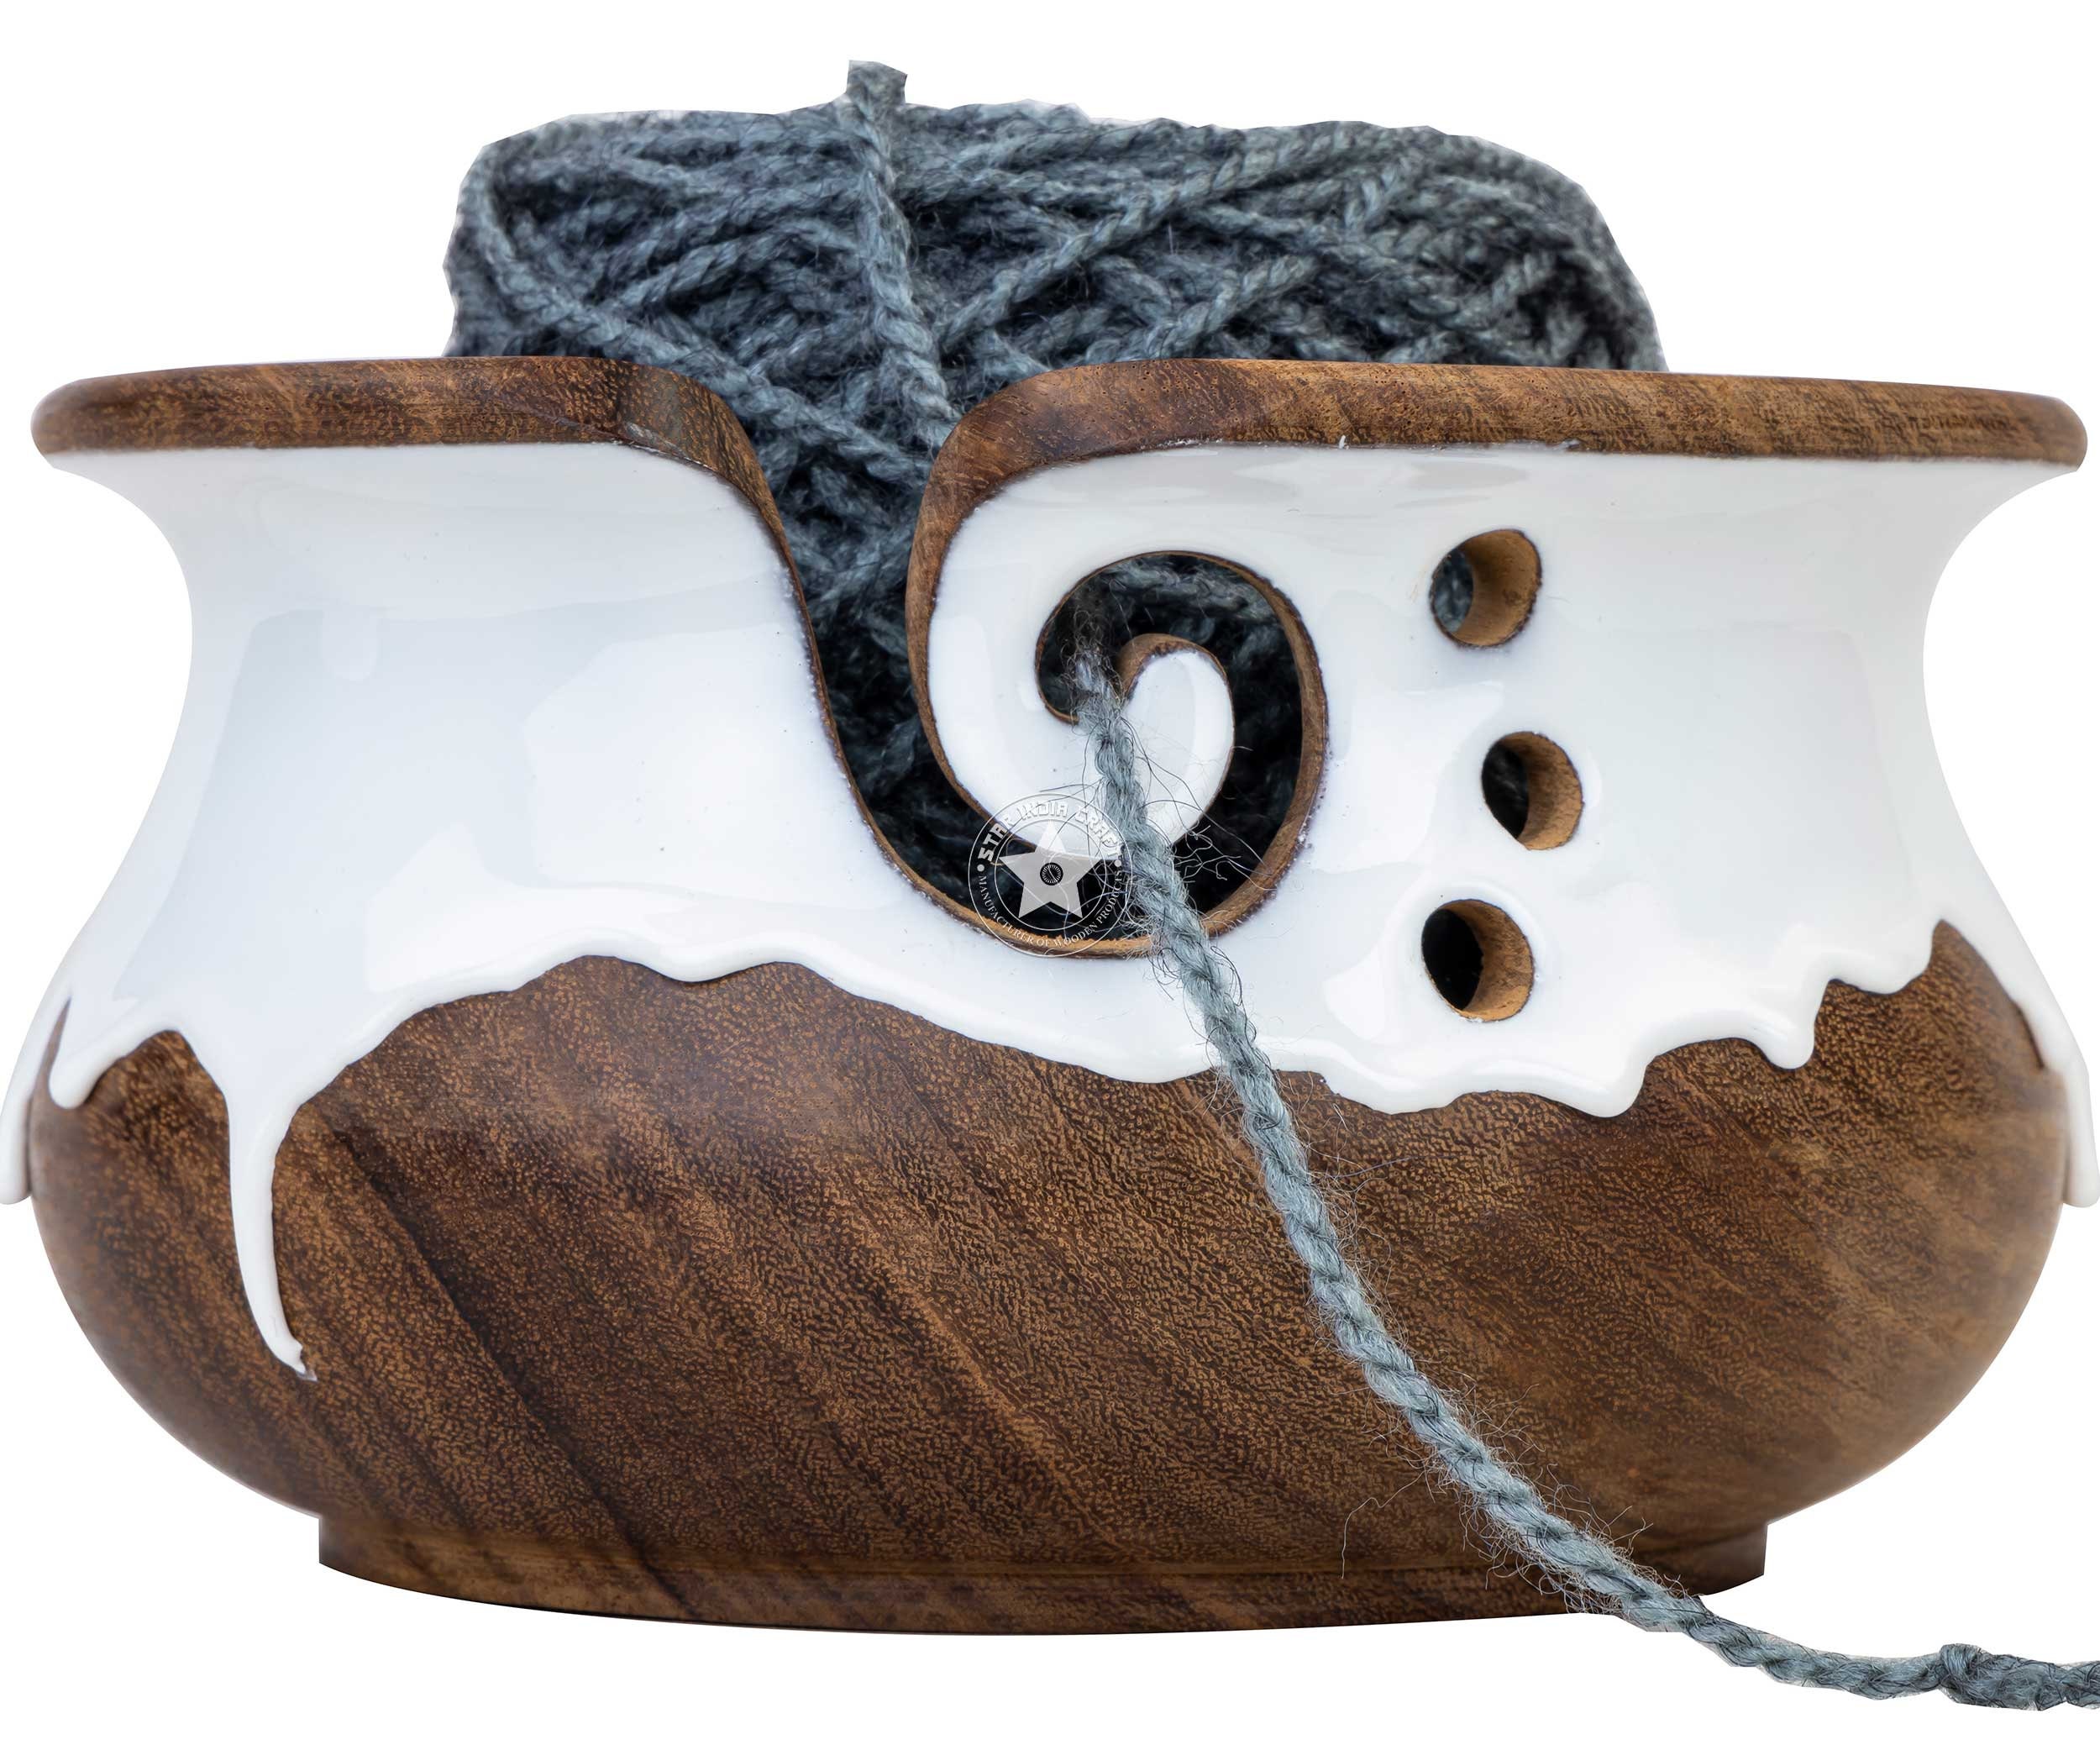 Talavera Pottery Ceramic Yarn Bowl Knitting Bowl Crochet Bowl